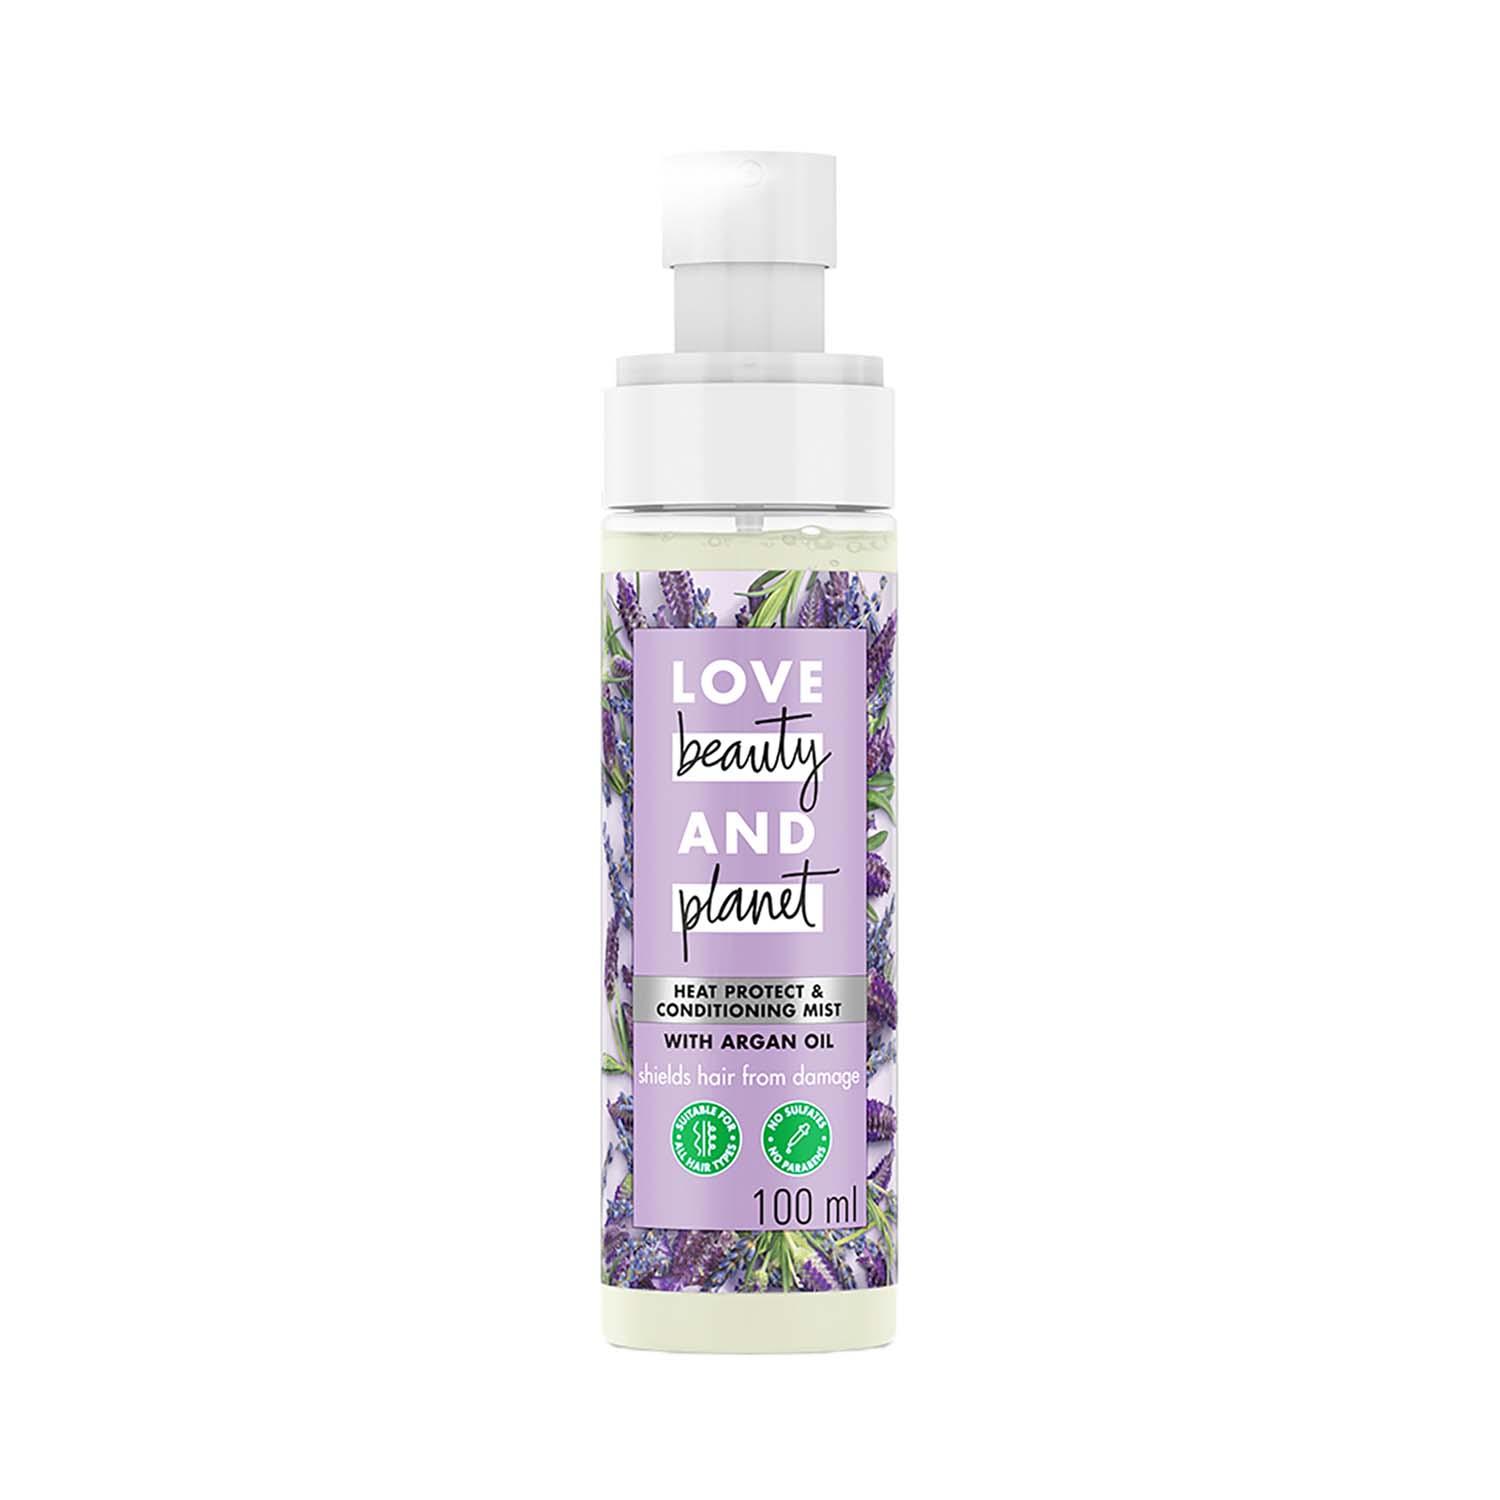 Love Beauty & Planet | Love Beauty & Planet Argan Oil Heat Protect & Conditioning Mist (100 ml)